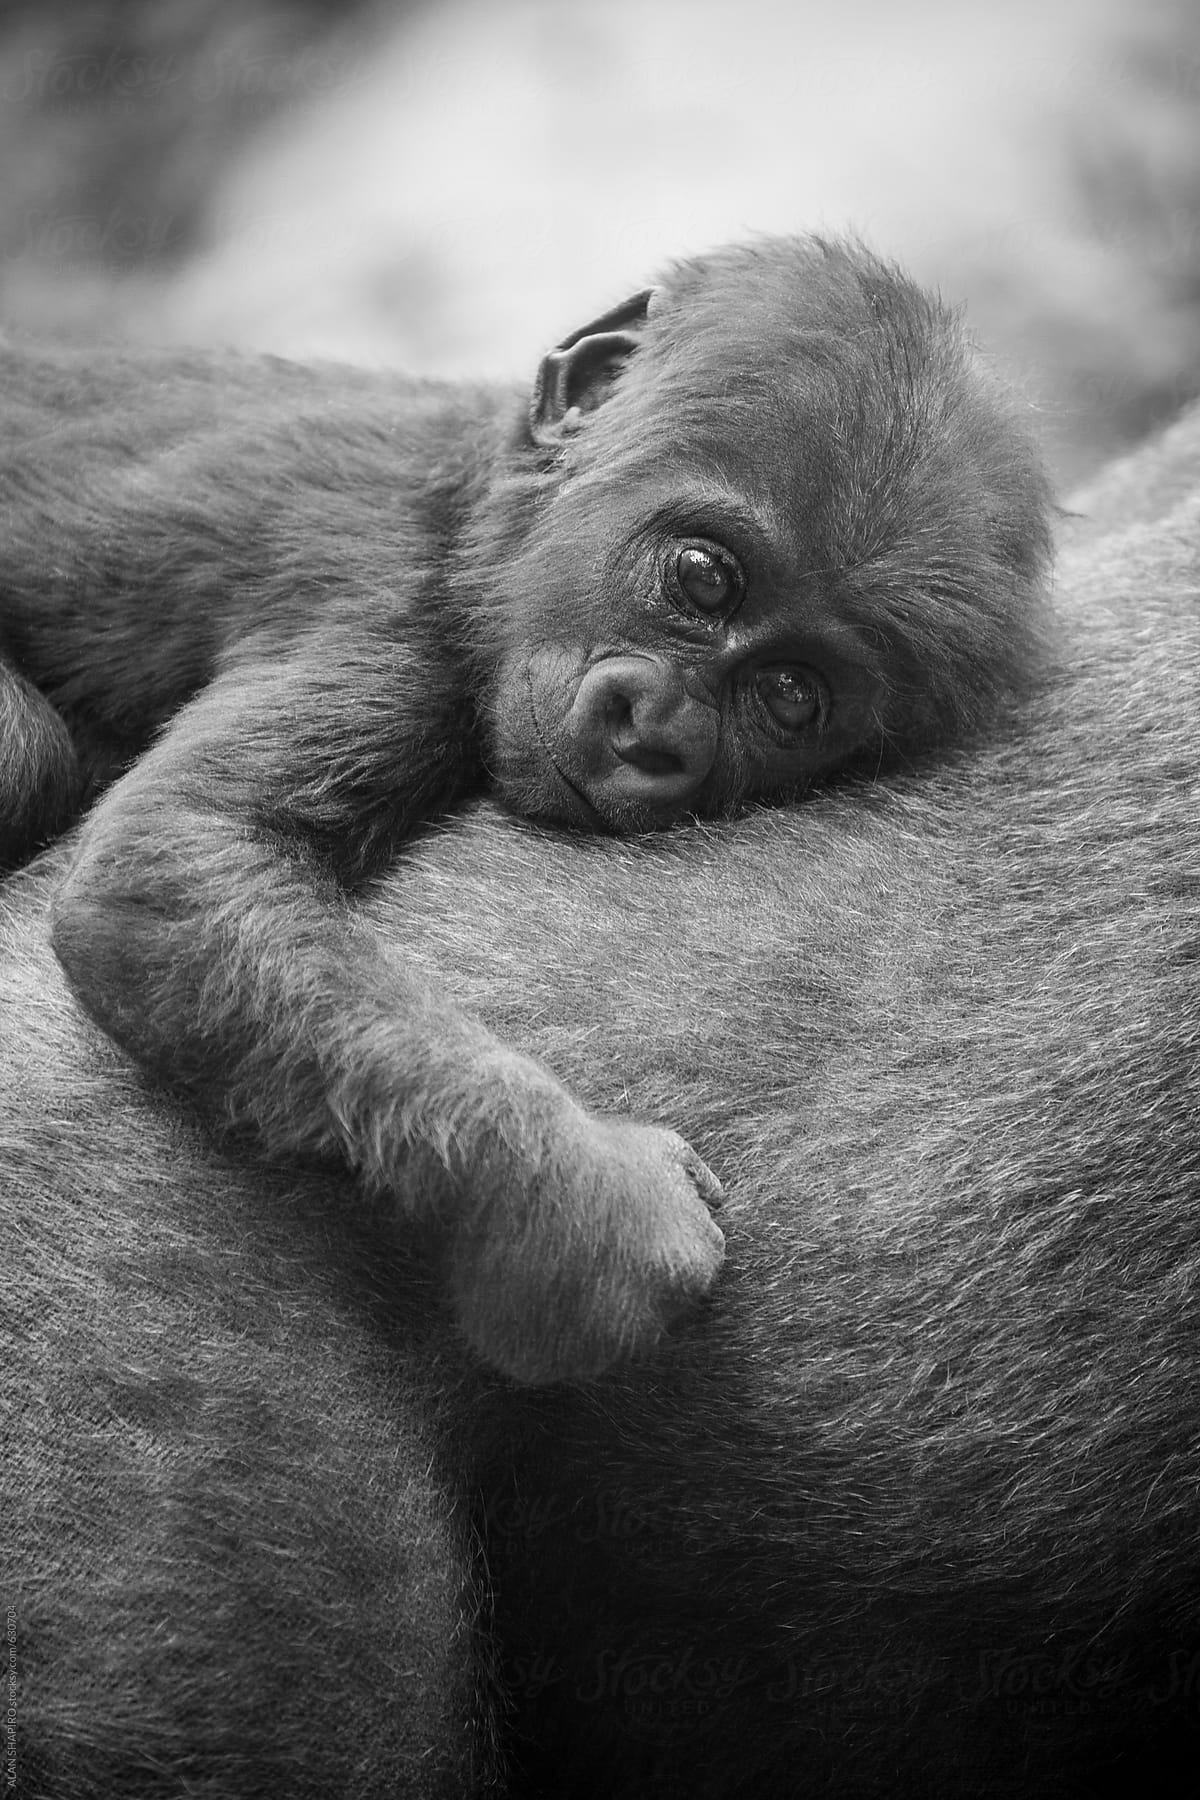 newborn gorilla on his mother\'s back